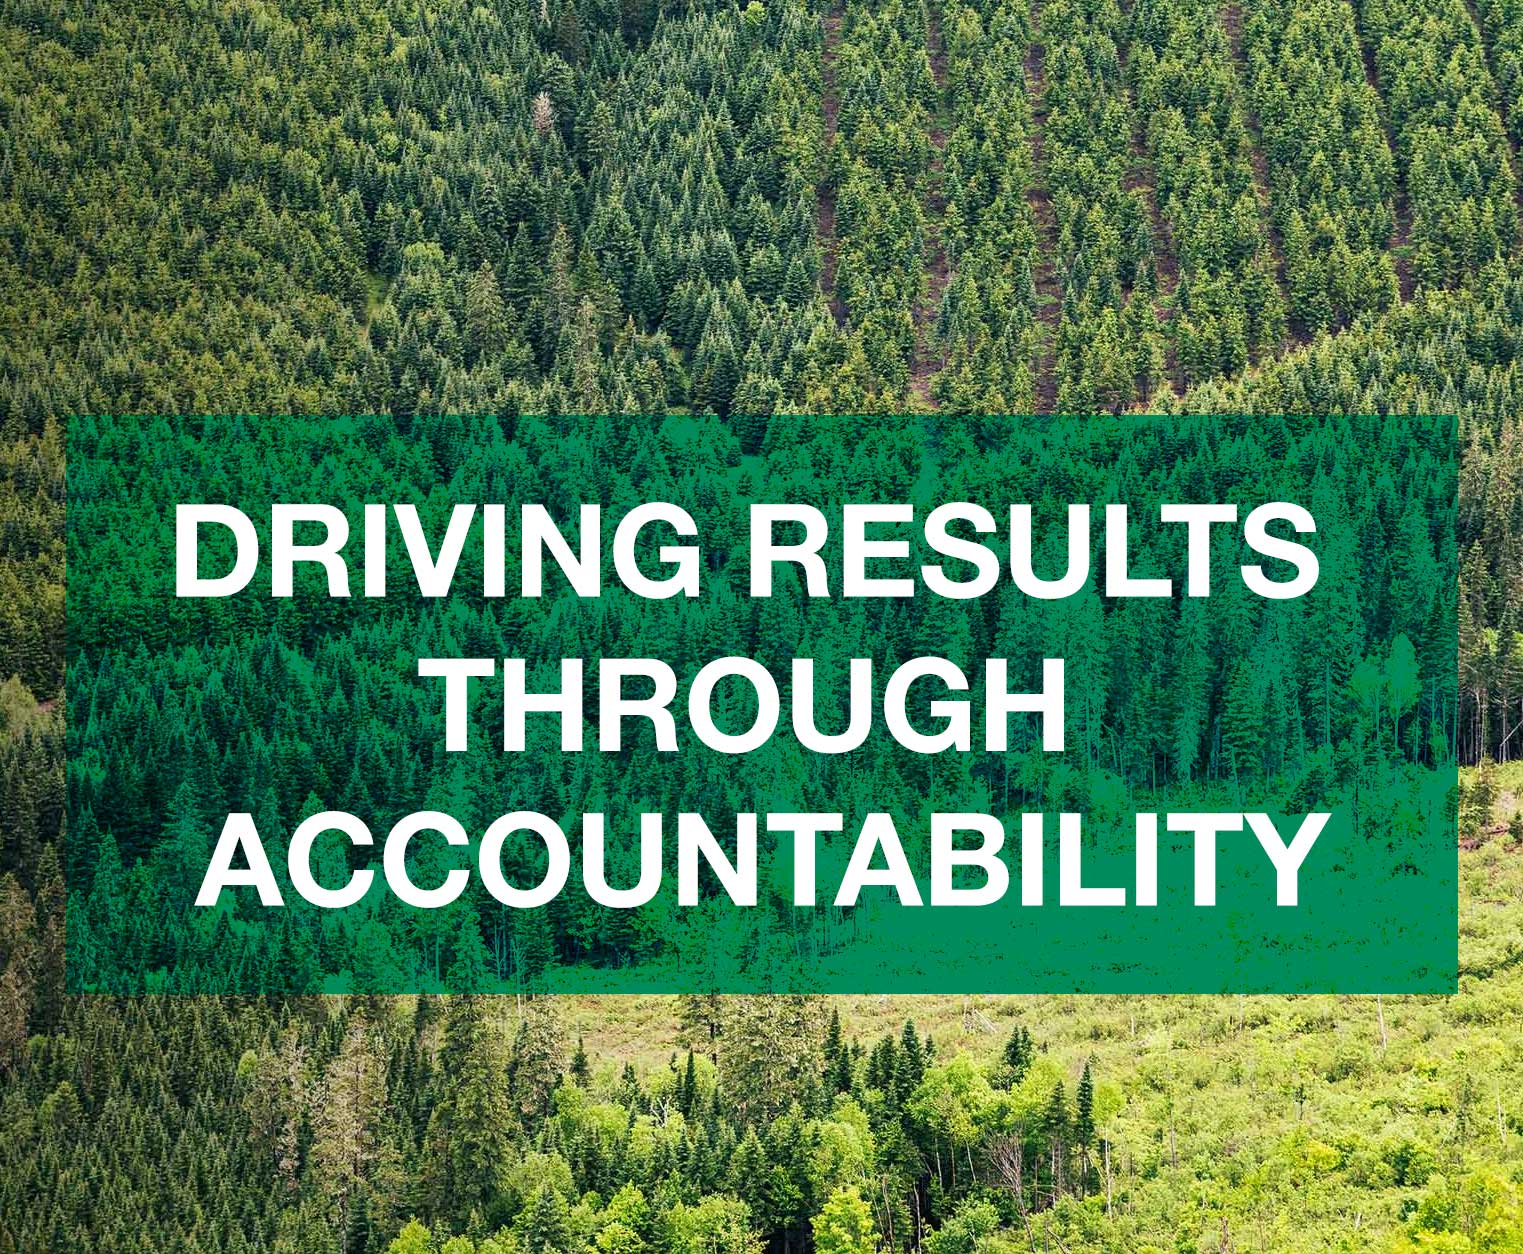 tile-Driving-results-through-accountability.jpg